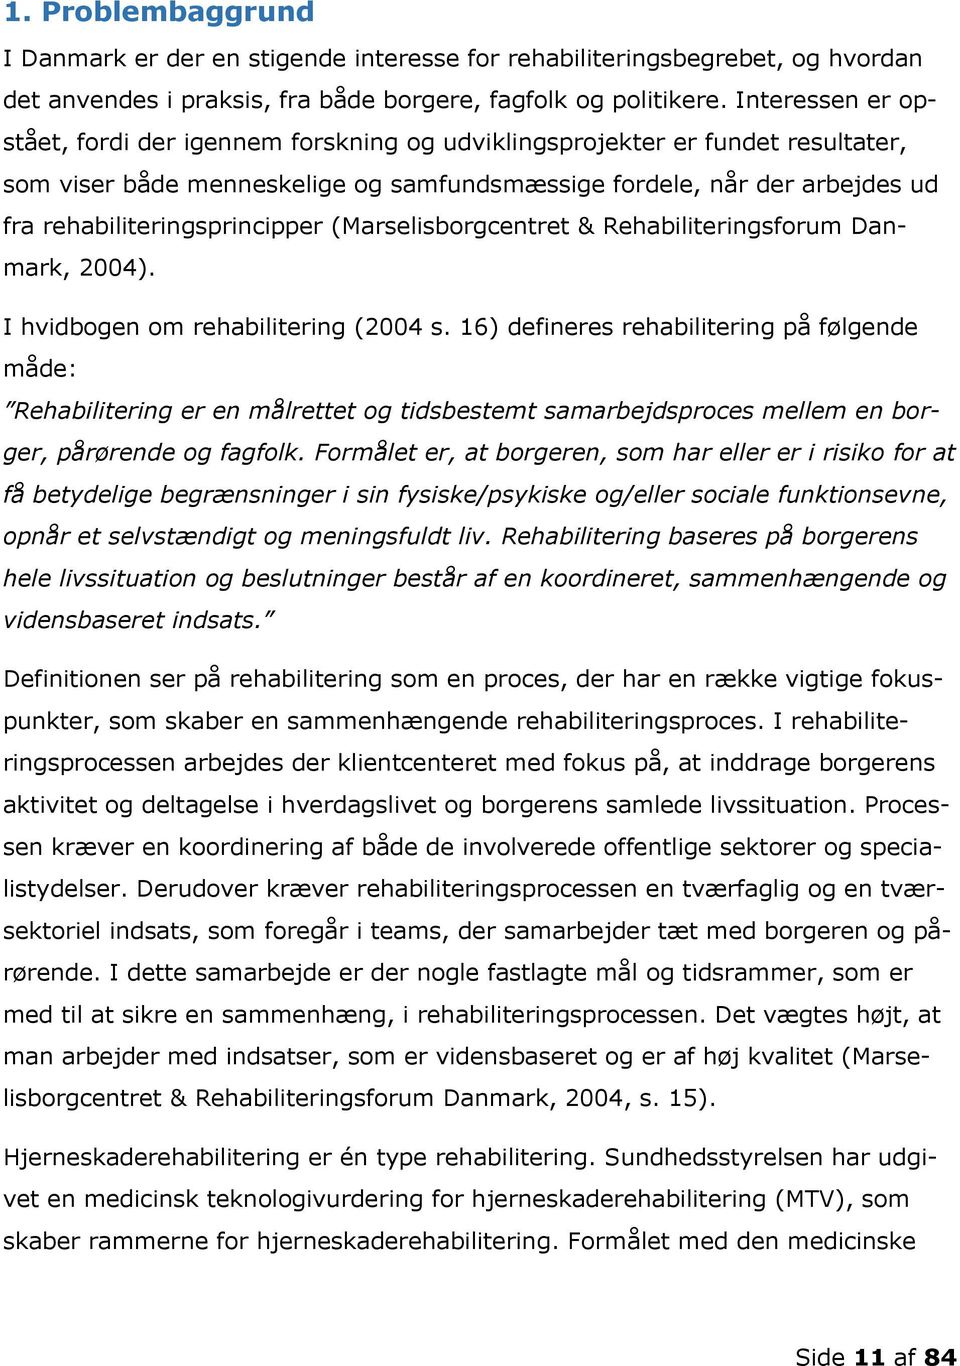 rehabiliteringsprincipper (Marselisborgcentret & Rehabiliteringsforum Danmark, 2004). I hvidbogen om rehabilitering (2004 s.